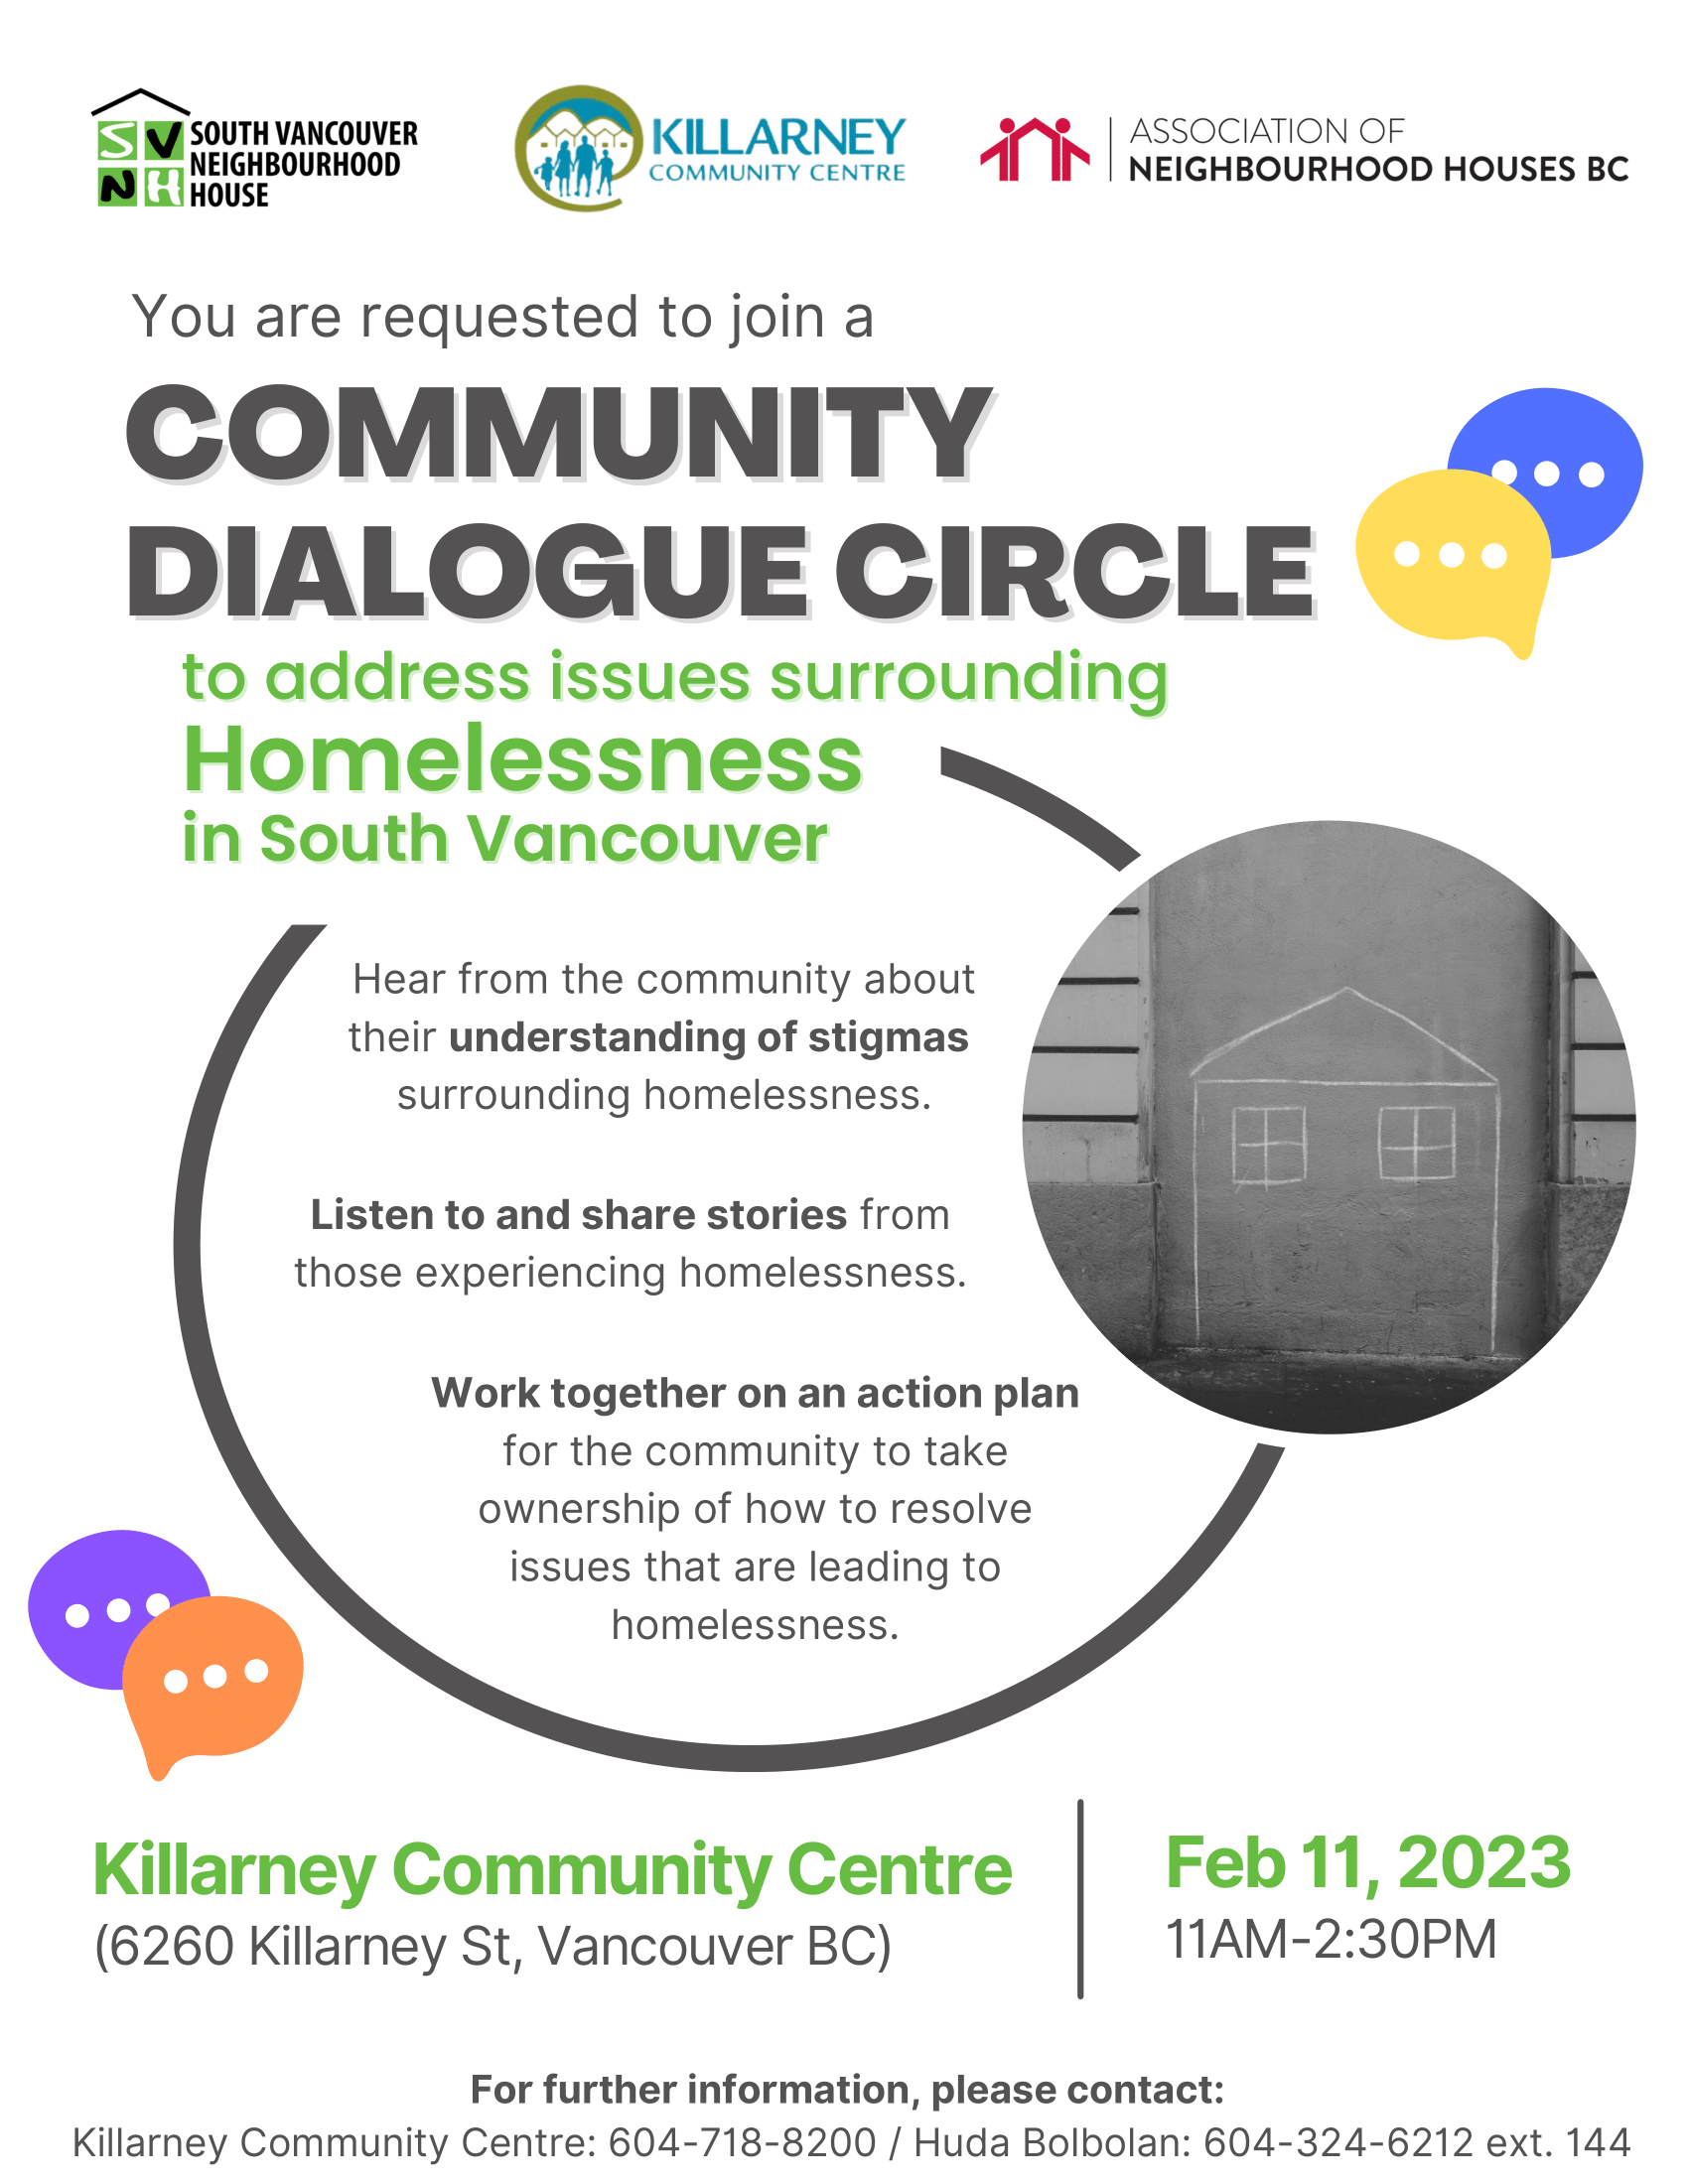 Community Dialogue Circle – Saturday, February 11, 2023